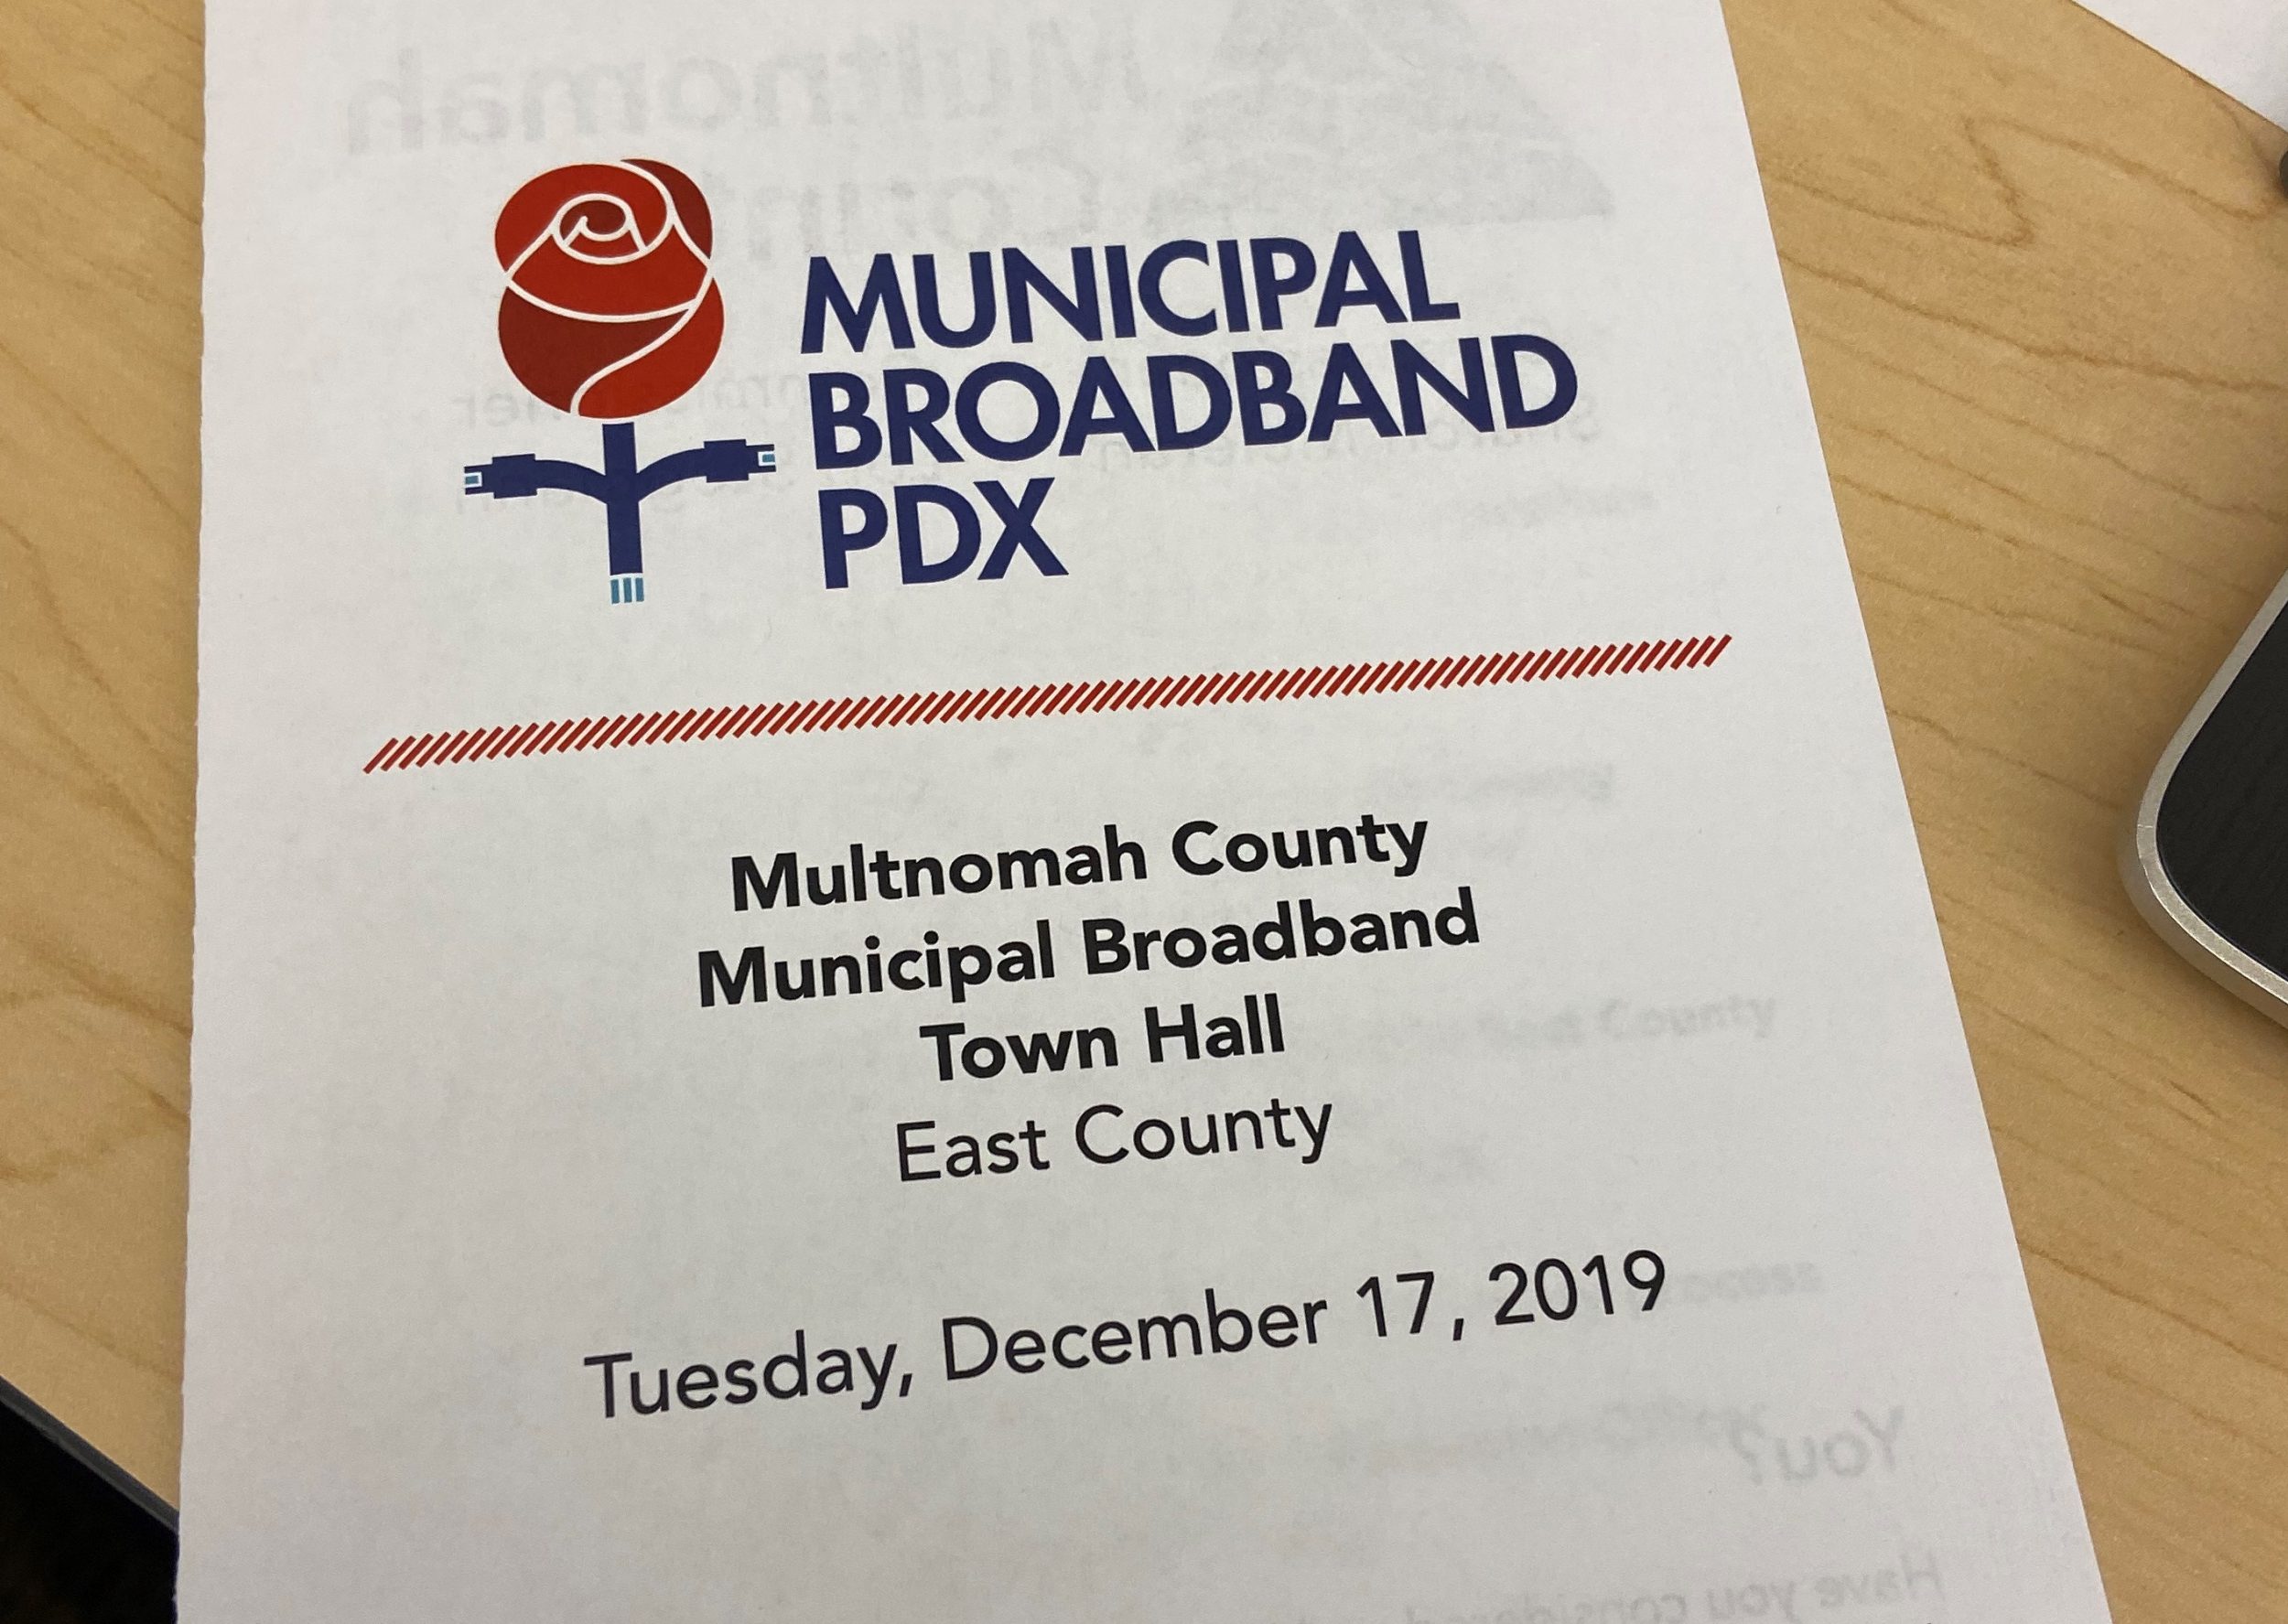 Municipal Broadband PDX handout from meeting on Dec. 17